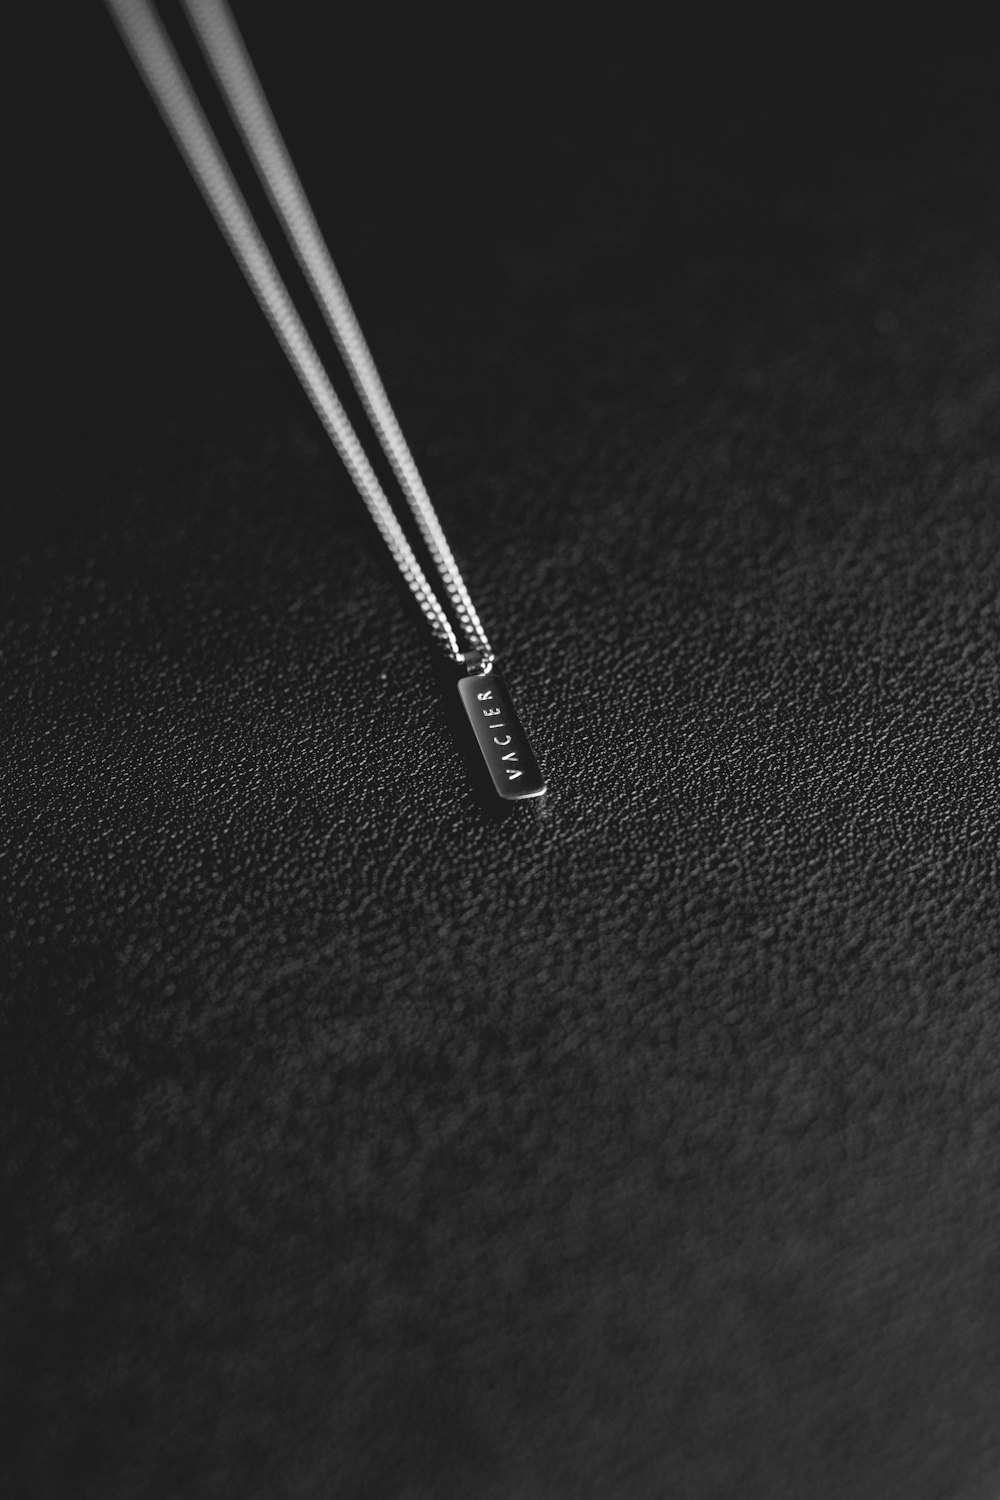 silver pin on black textile